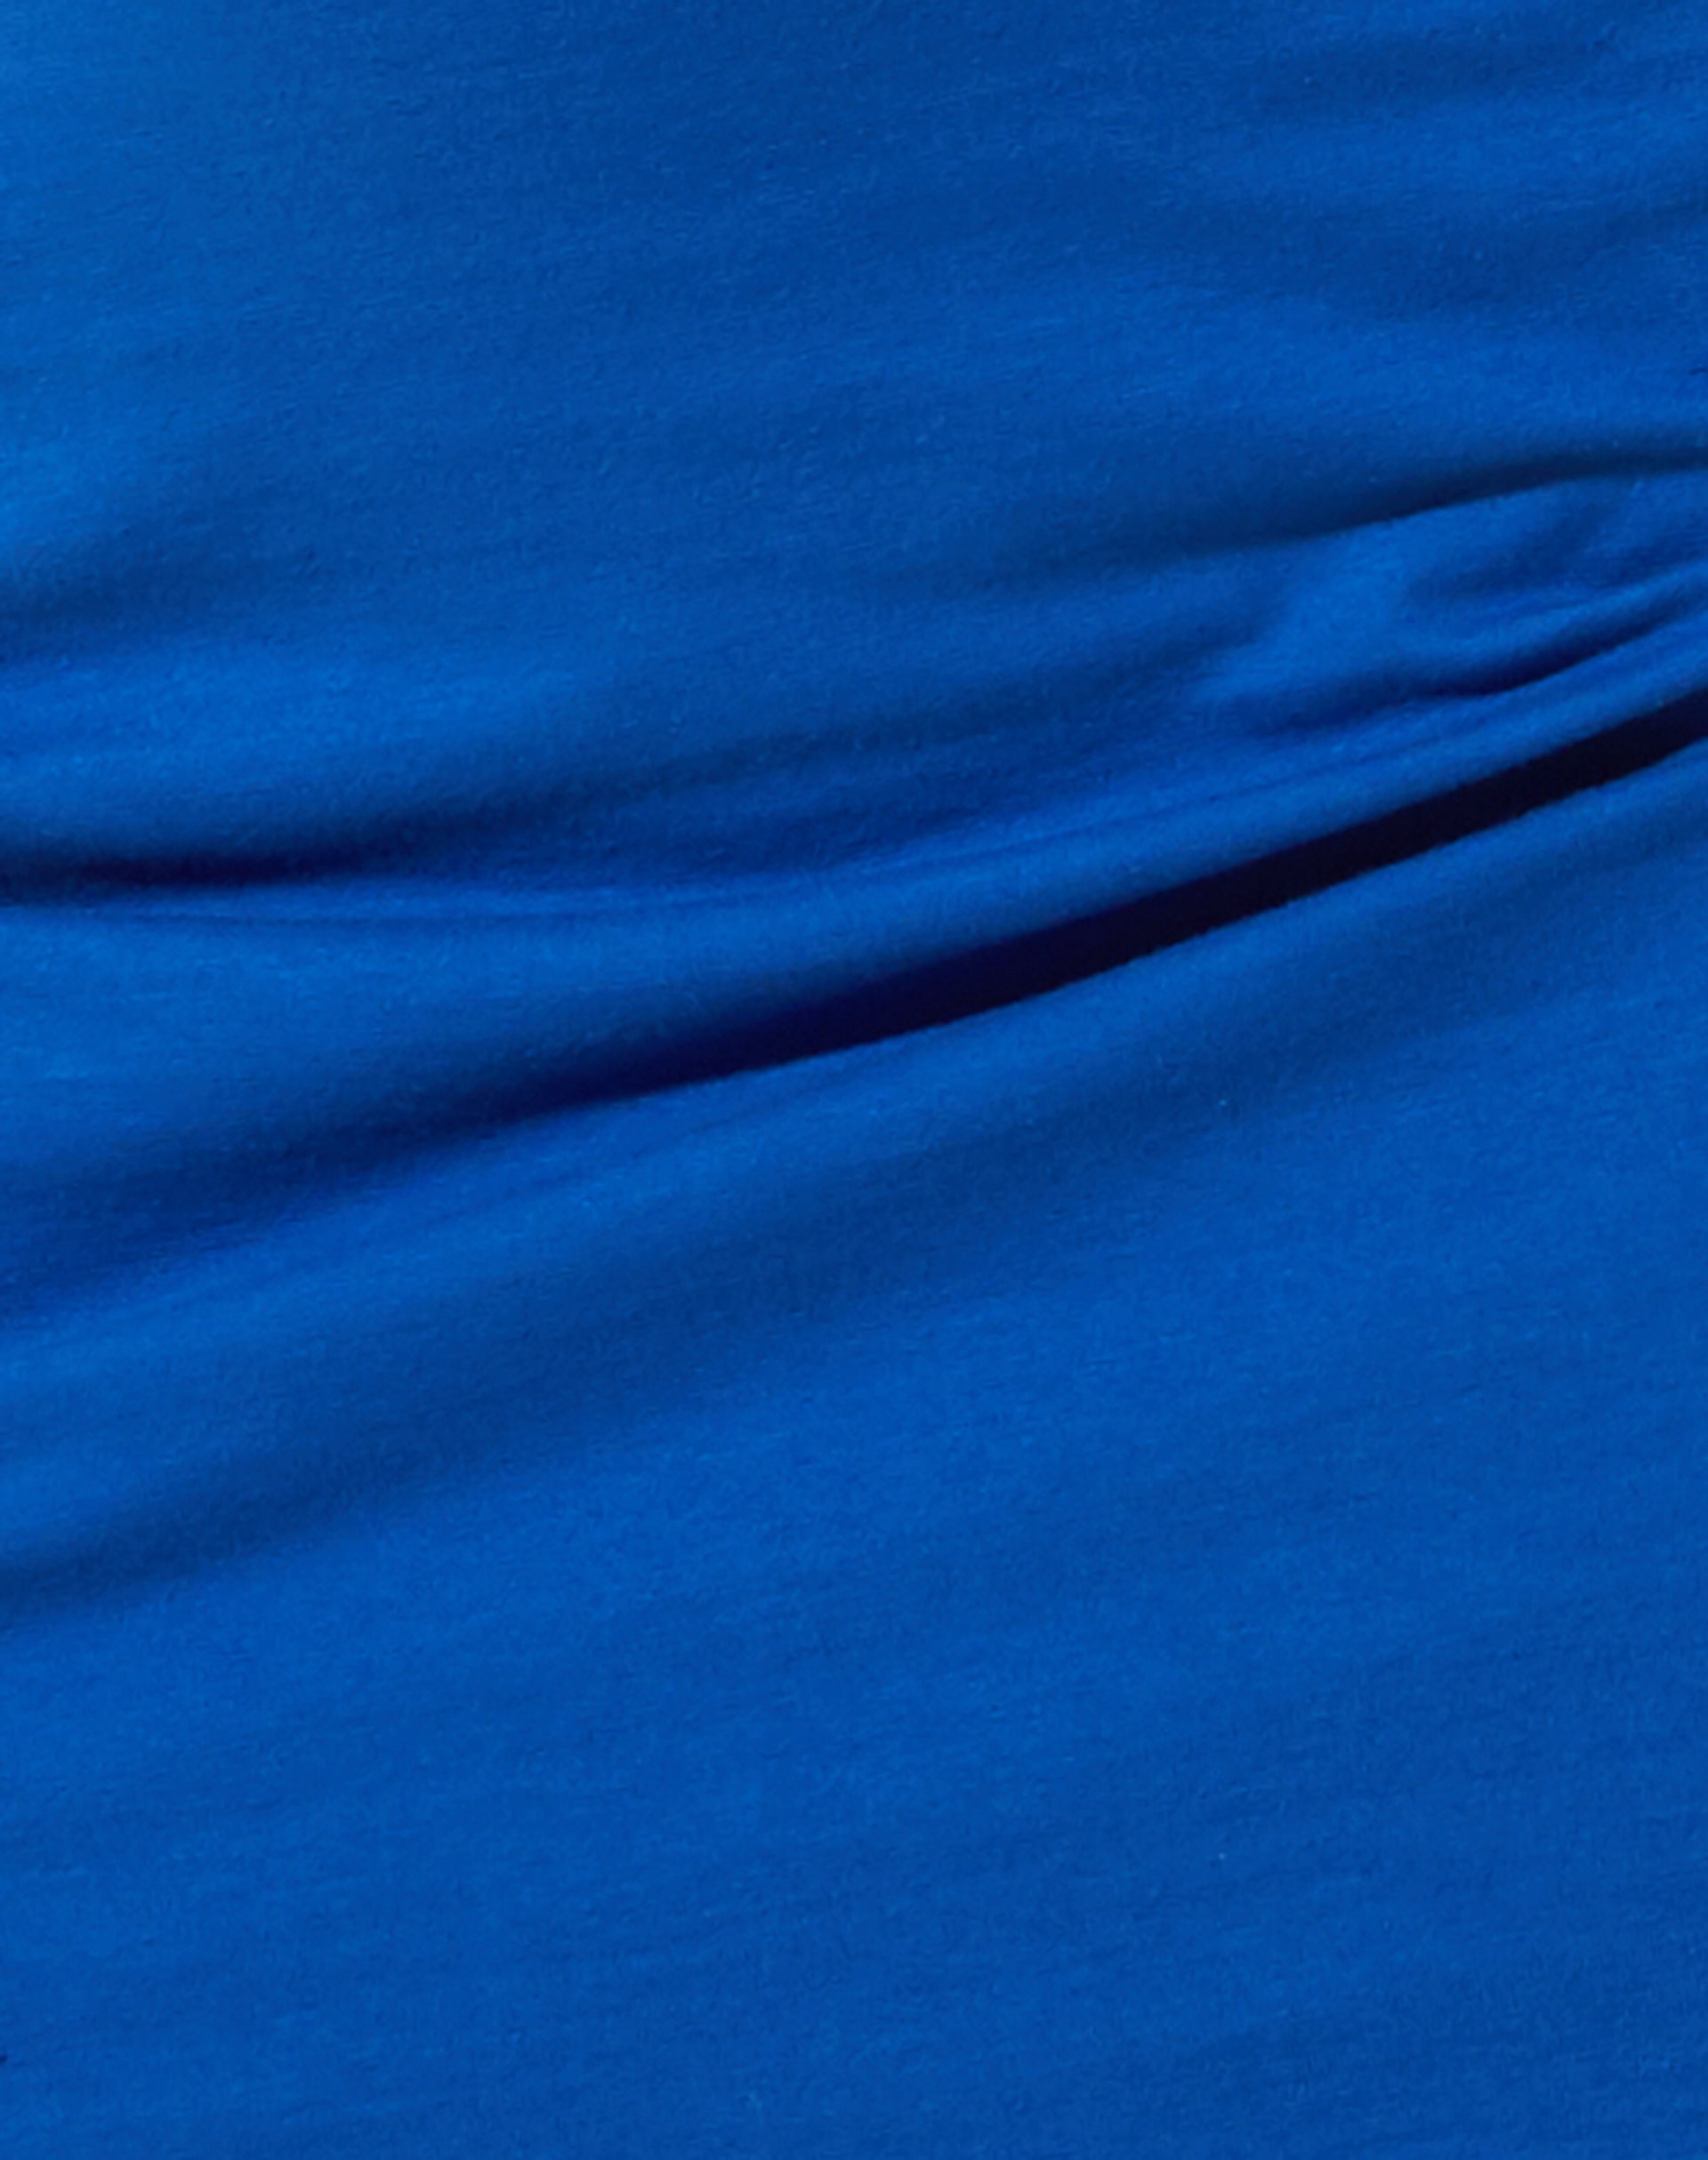 Cobalt Blue Mini Skirt with Buttons – BU Club